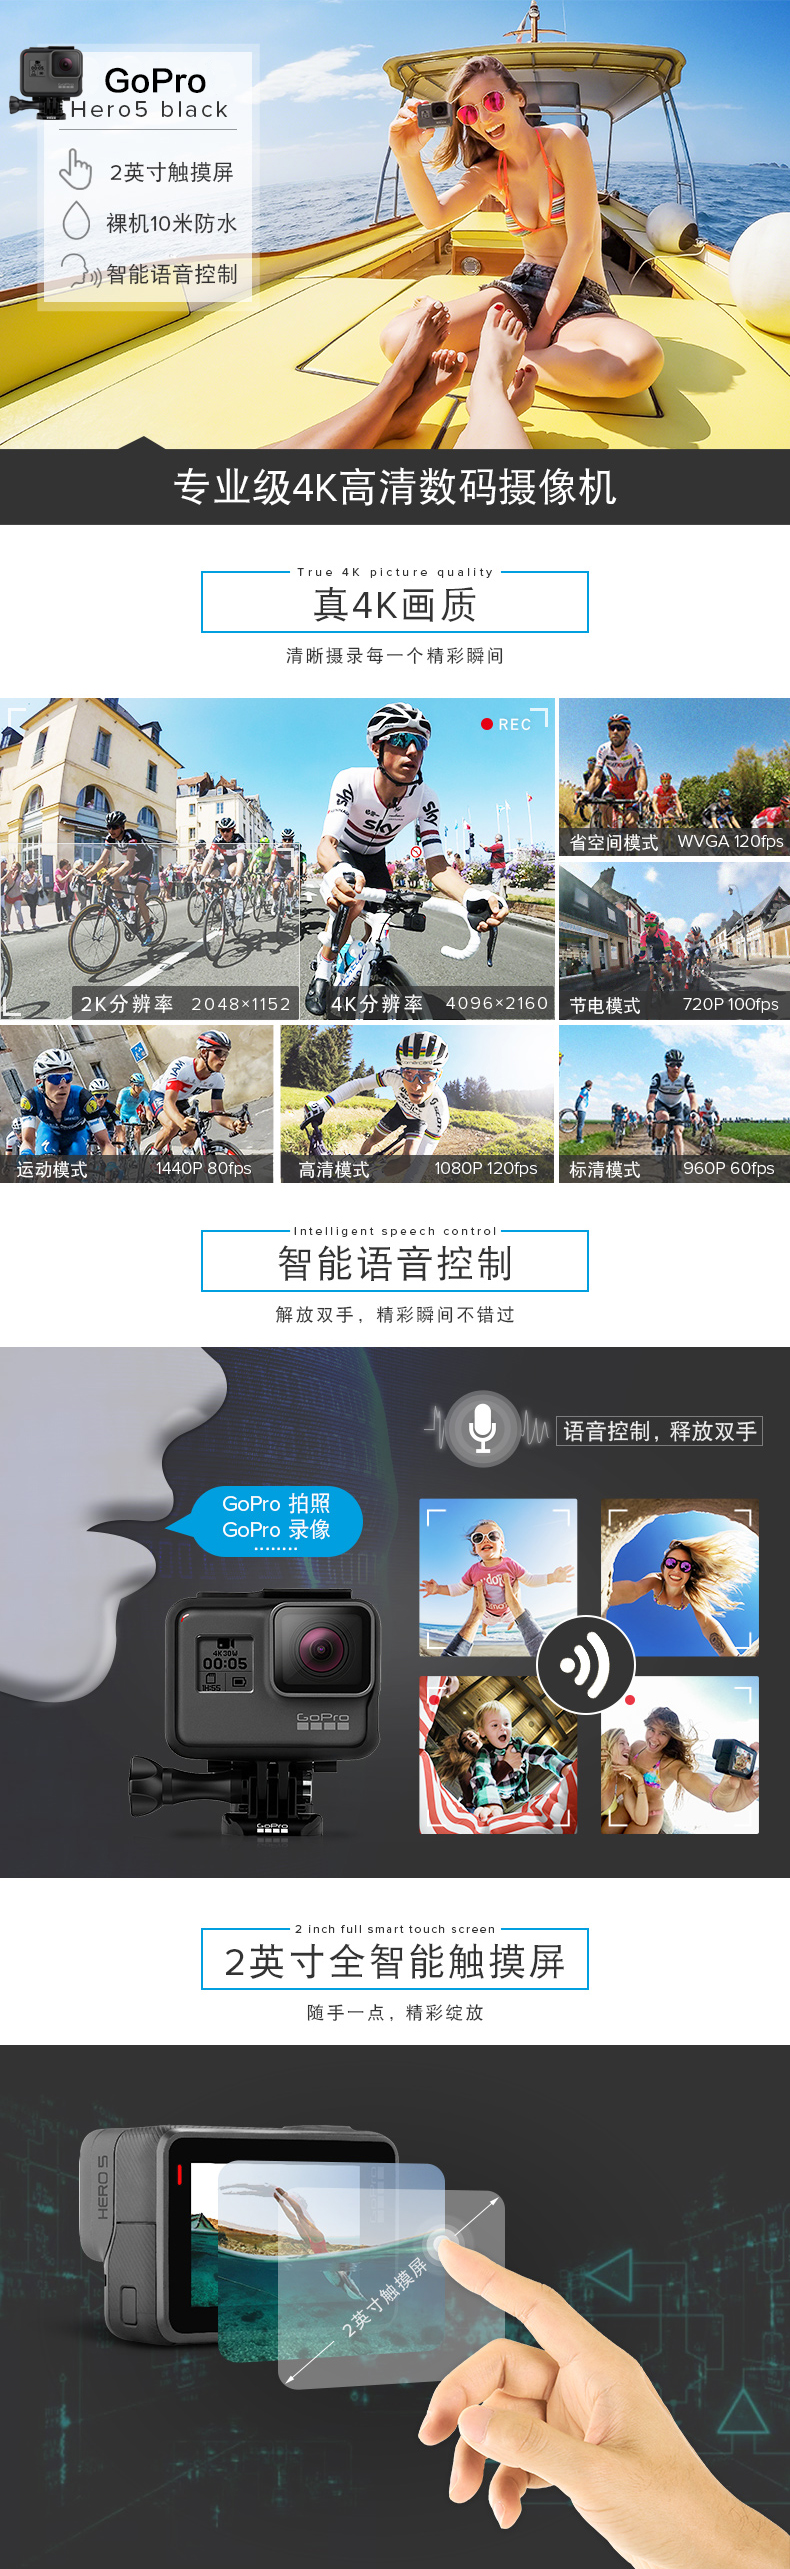 GoPro HERO 5 Black CHDHX-502 运动摄像机 4K高清 防水数码摄像机防抖功能、TF卡